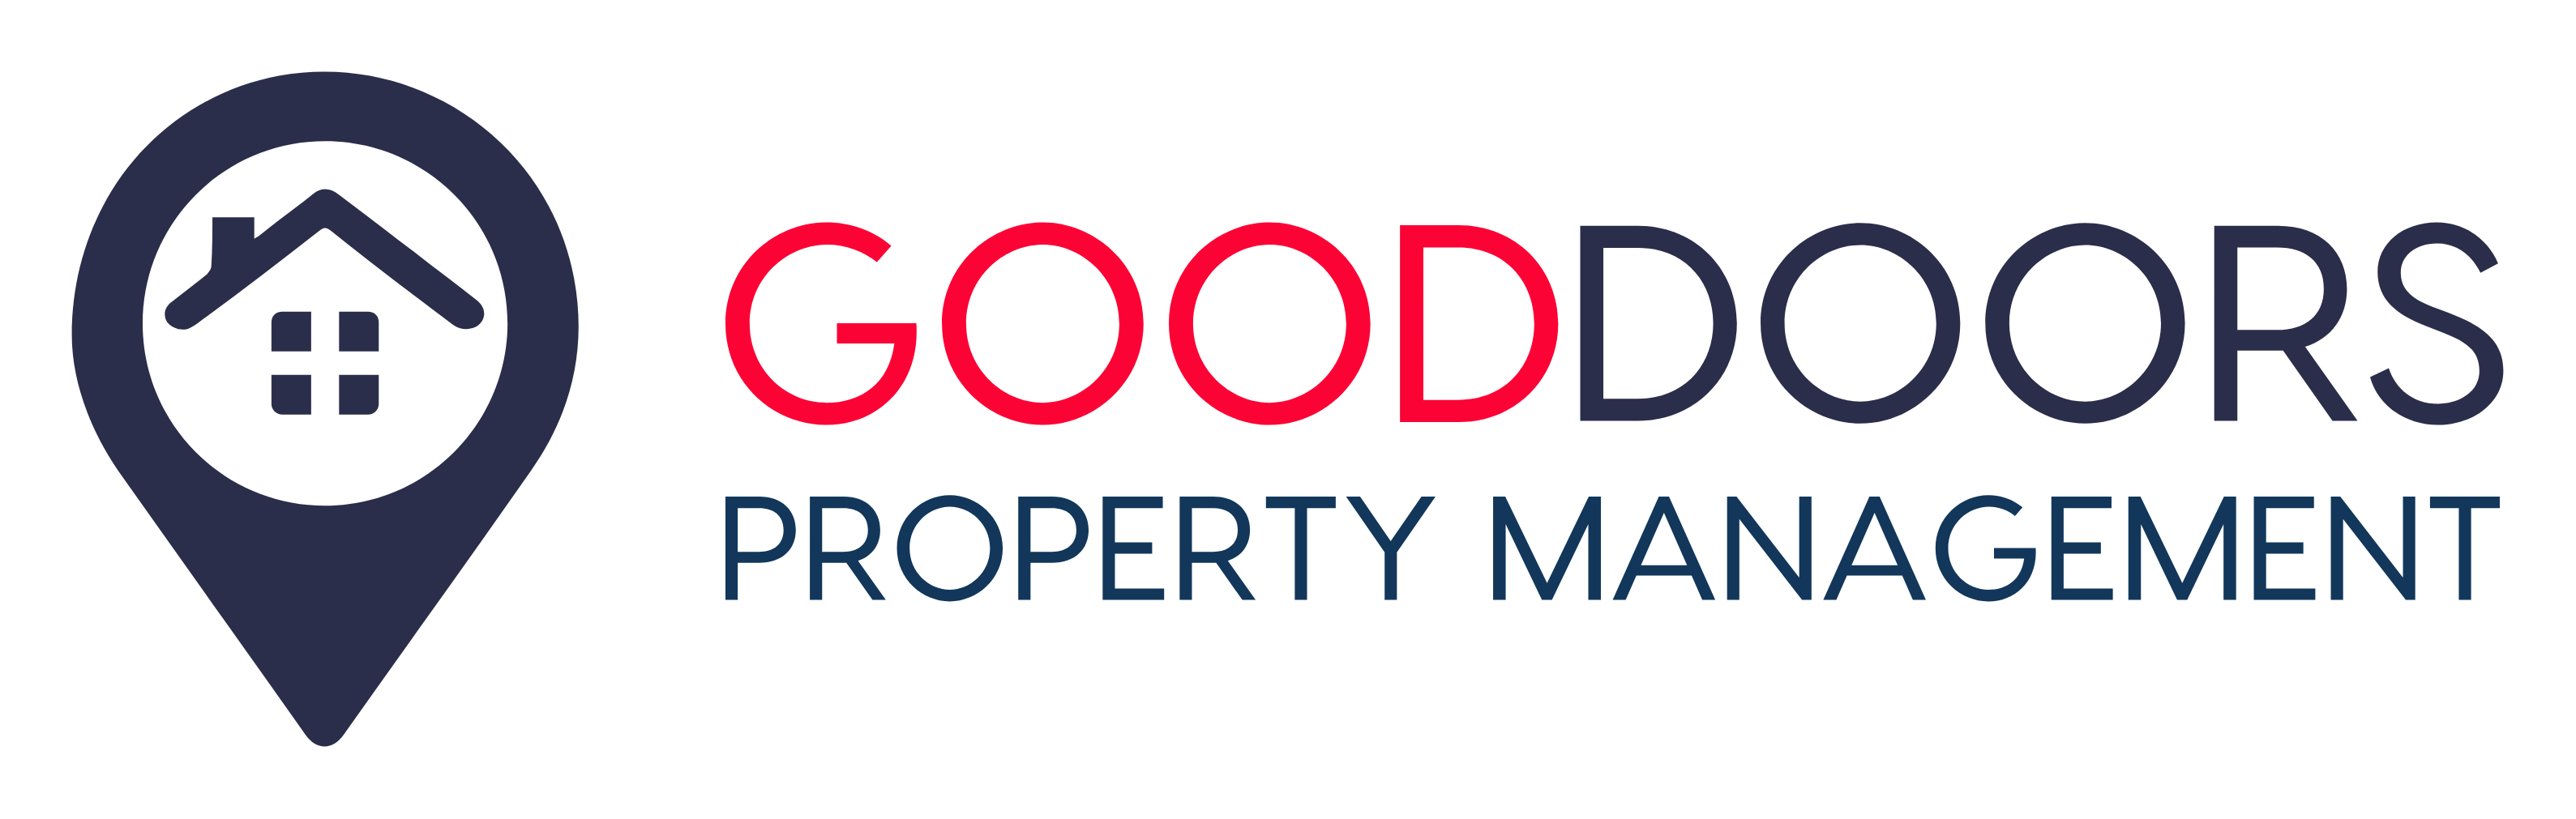 GoodDoors Property Management